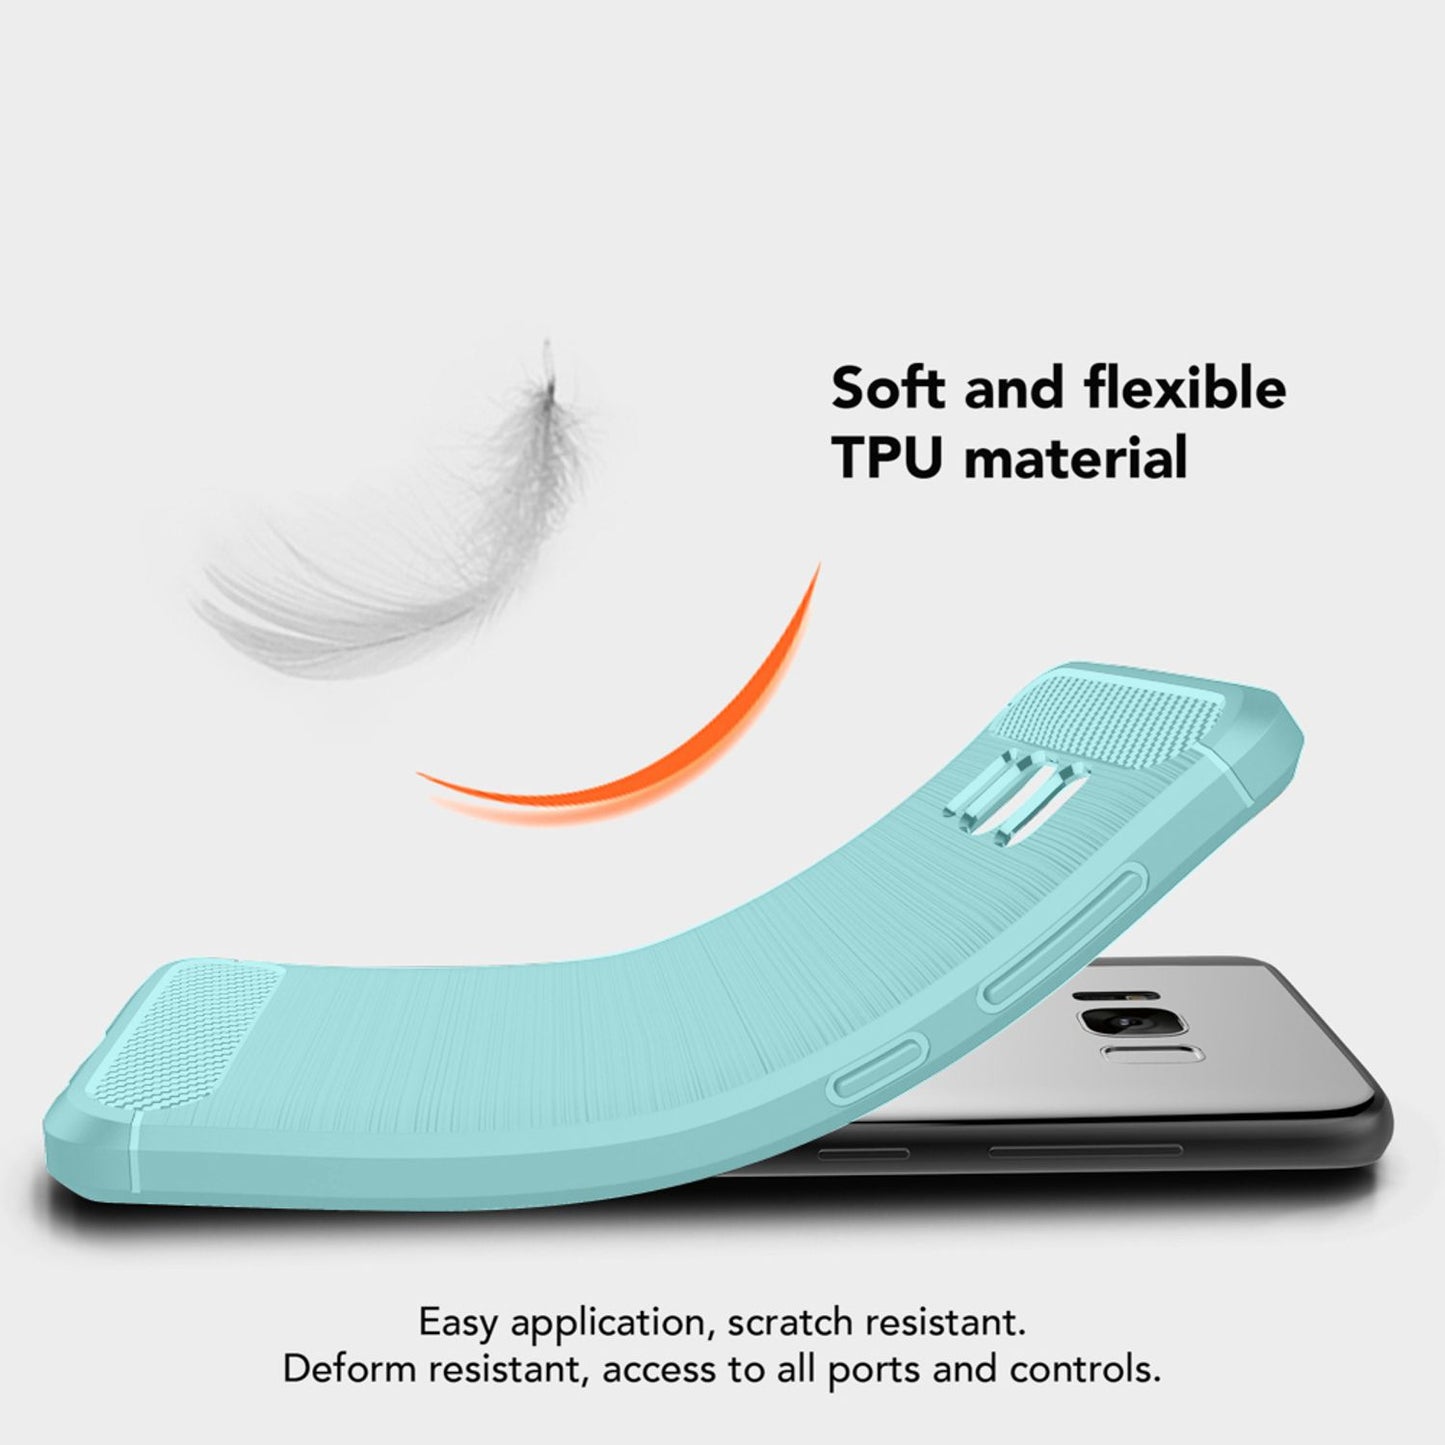 Samsung S8 Hülle Handyhülle von NALIA, Silikon Case Schutzhülle Back-Cover Etui